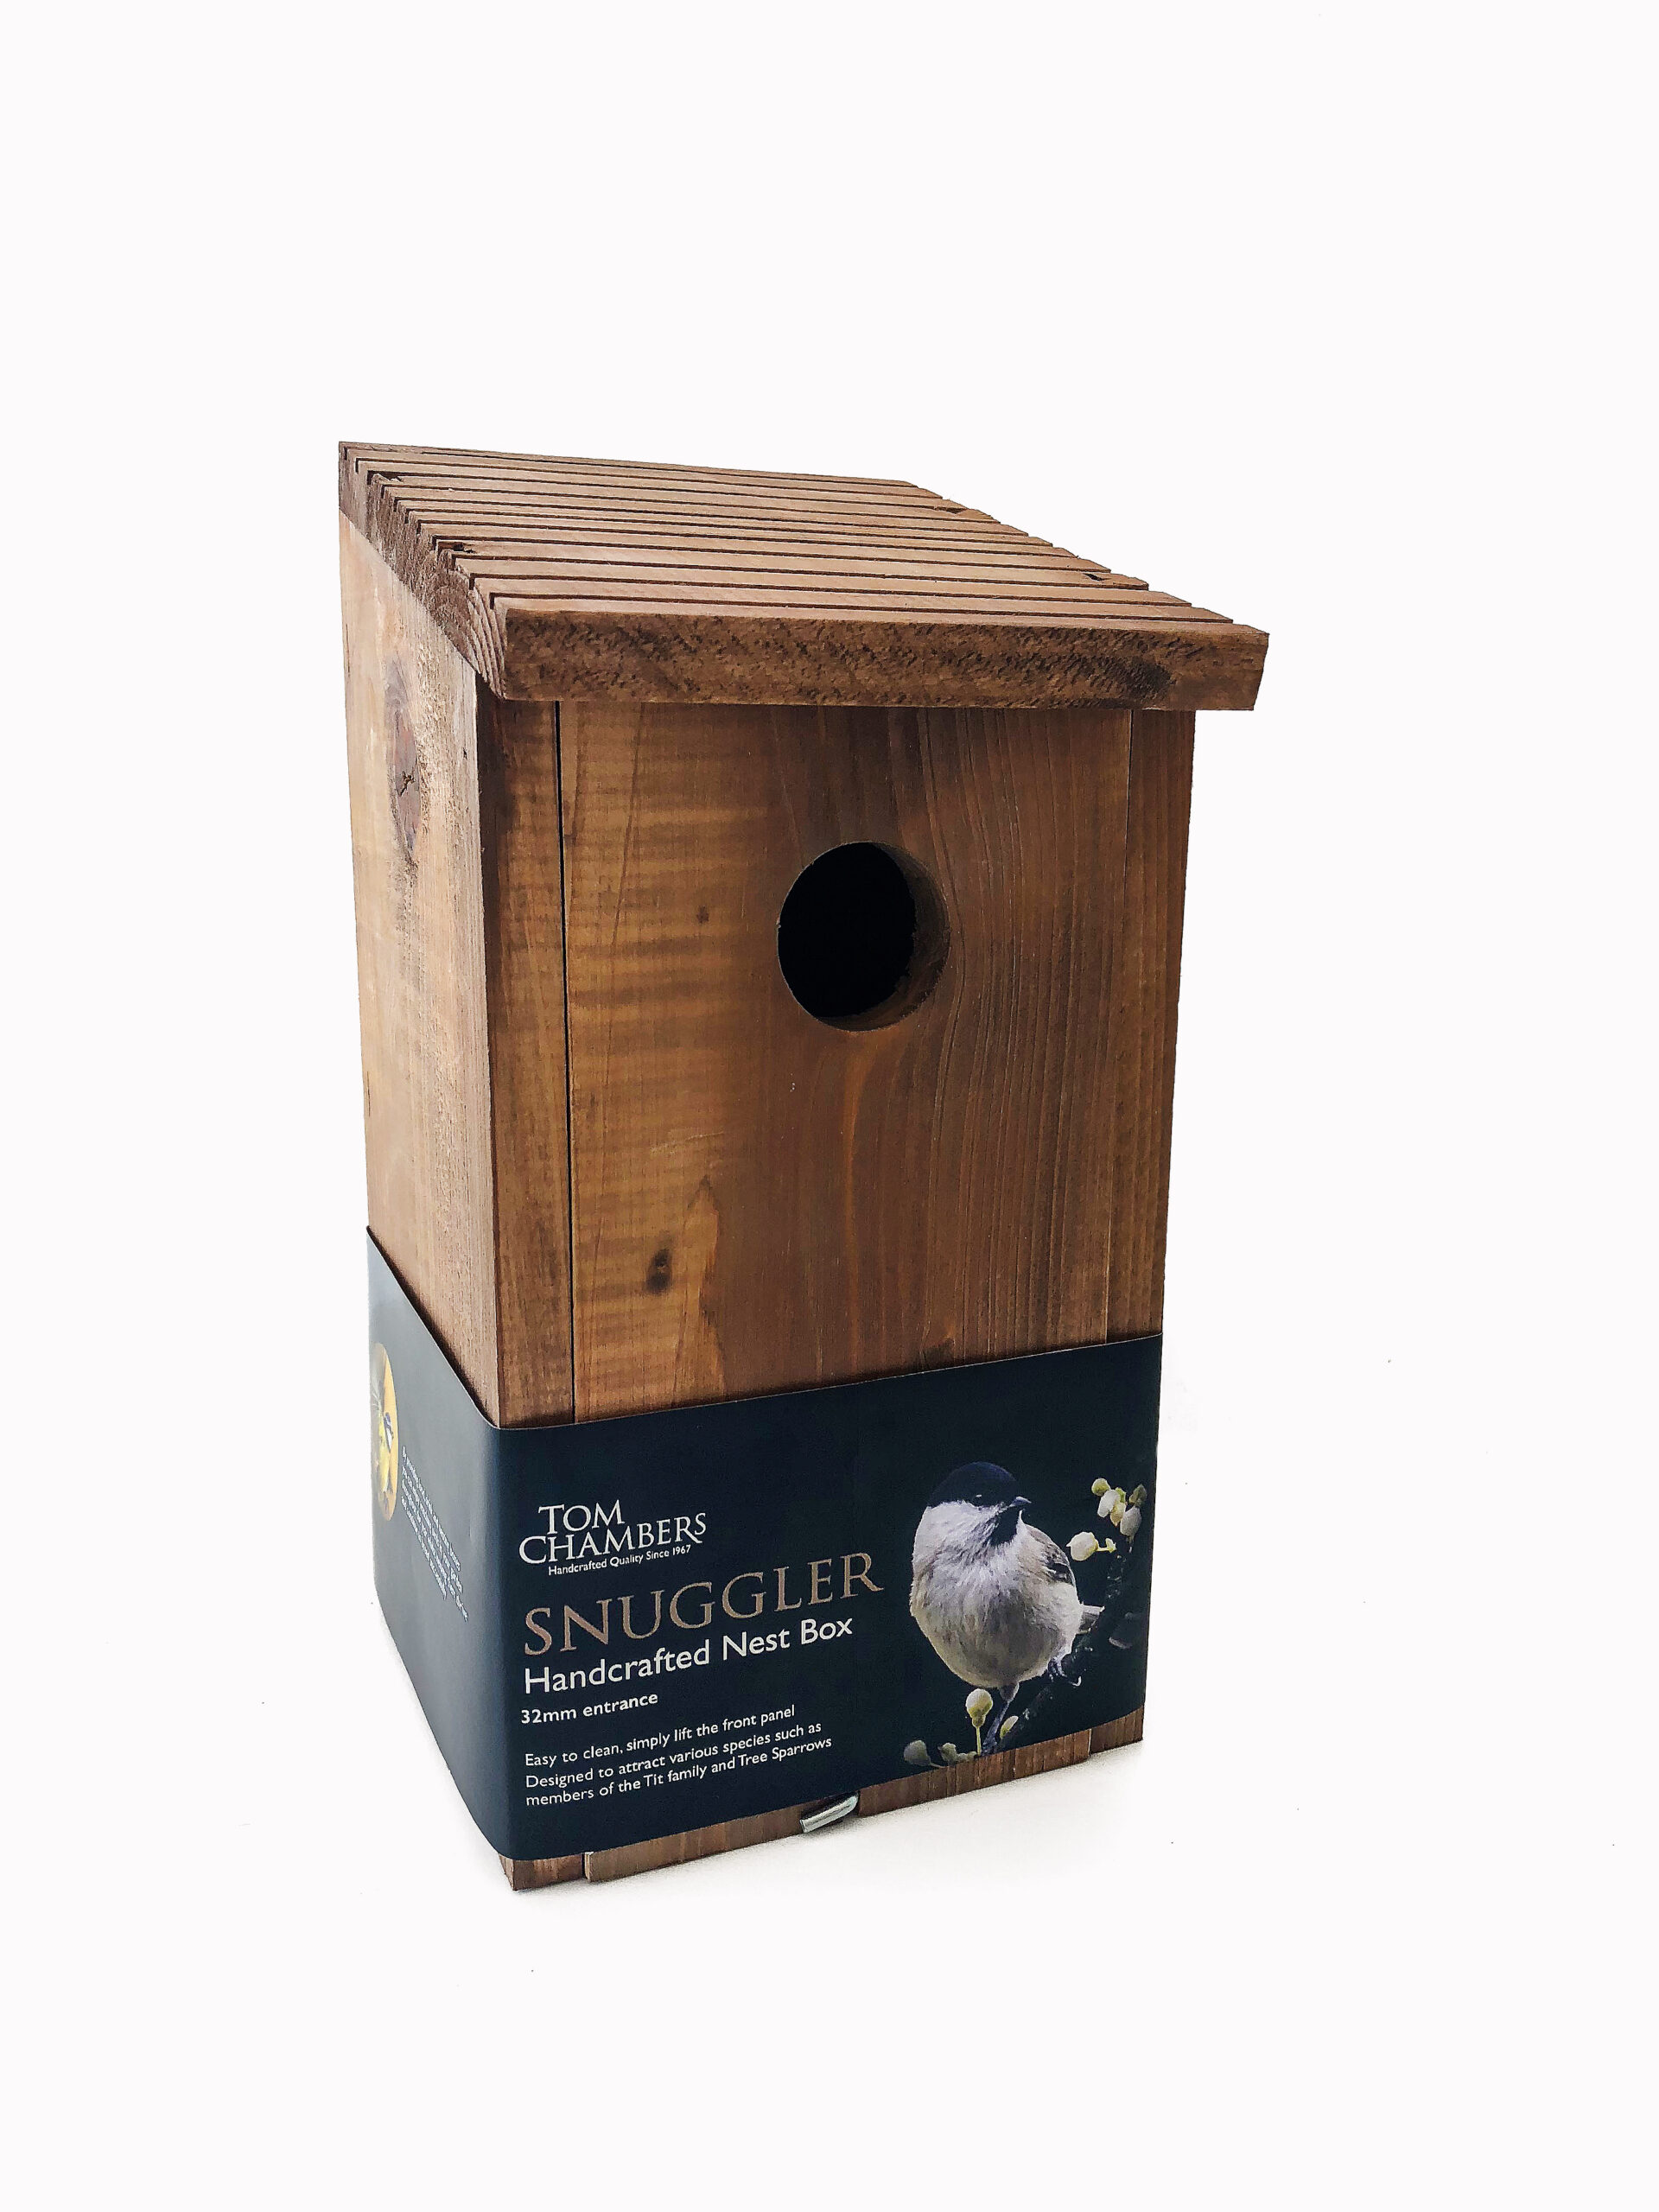 Tom chambers Snuggler Nest Box